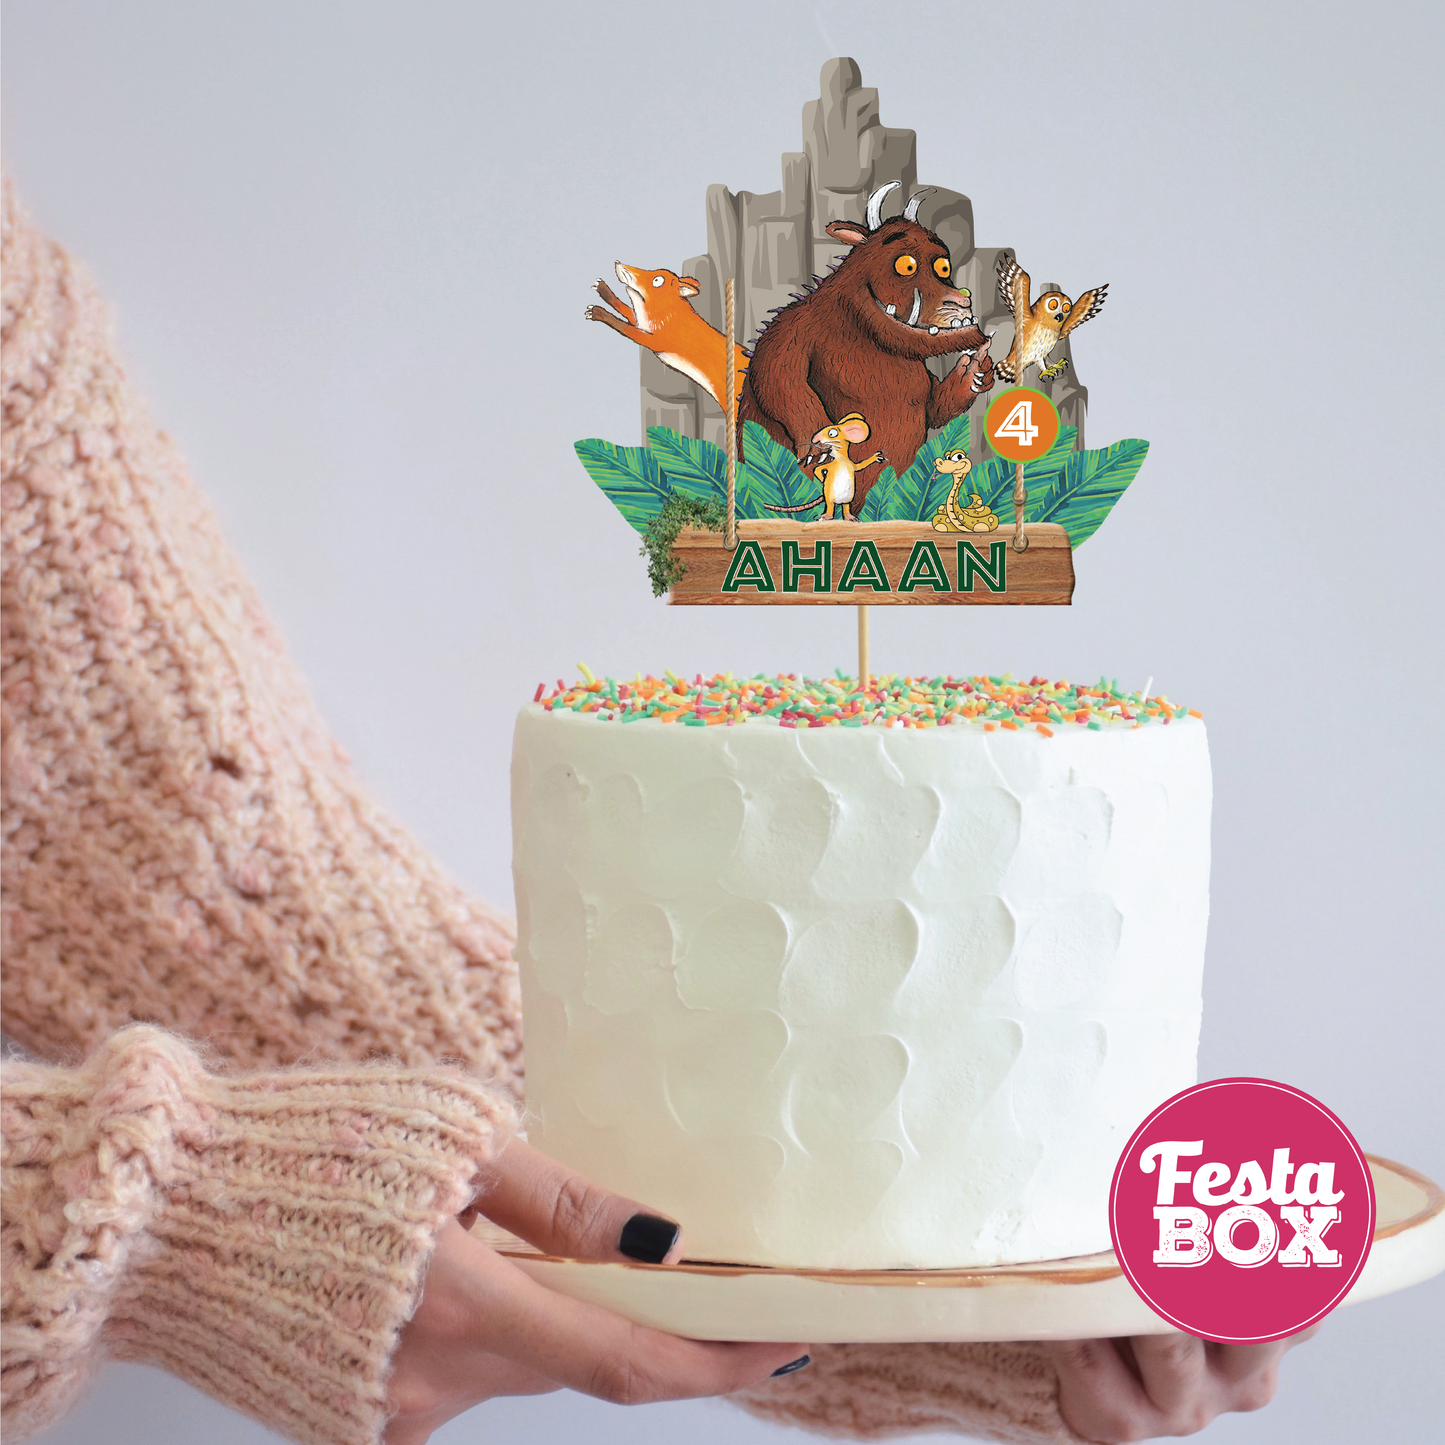 Cake Topper for Birthday Party Decoration - Gruffalo Theme - Option 1